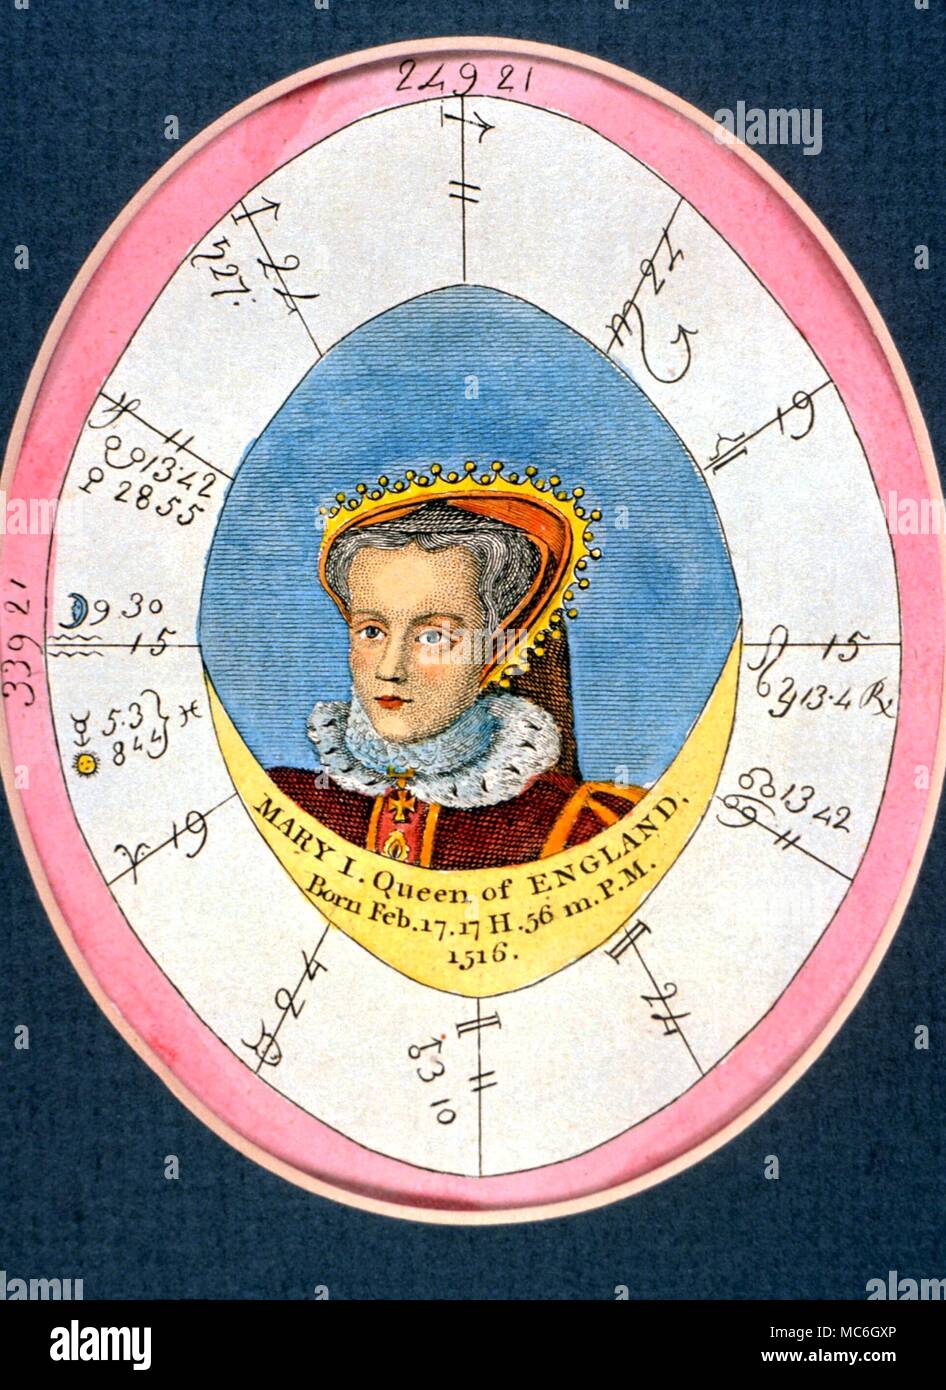 HOROSCOPES - Mary I of England. Horoscope of Mary I of England, cast by Sibly for his 'The Science of Astrology', 1790 Stock Photo